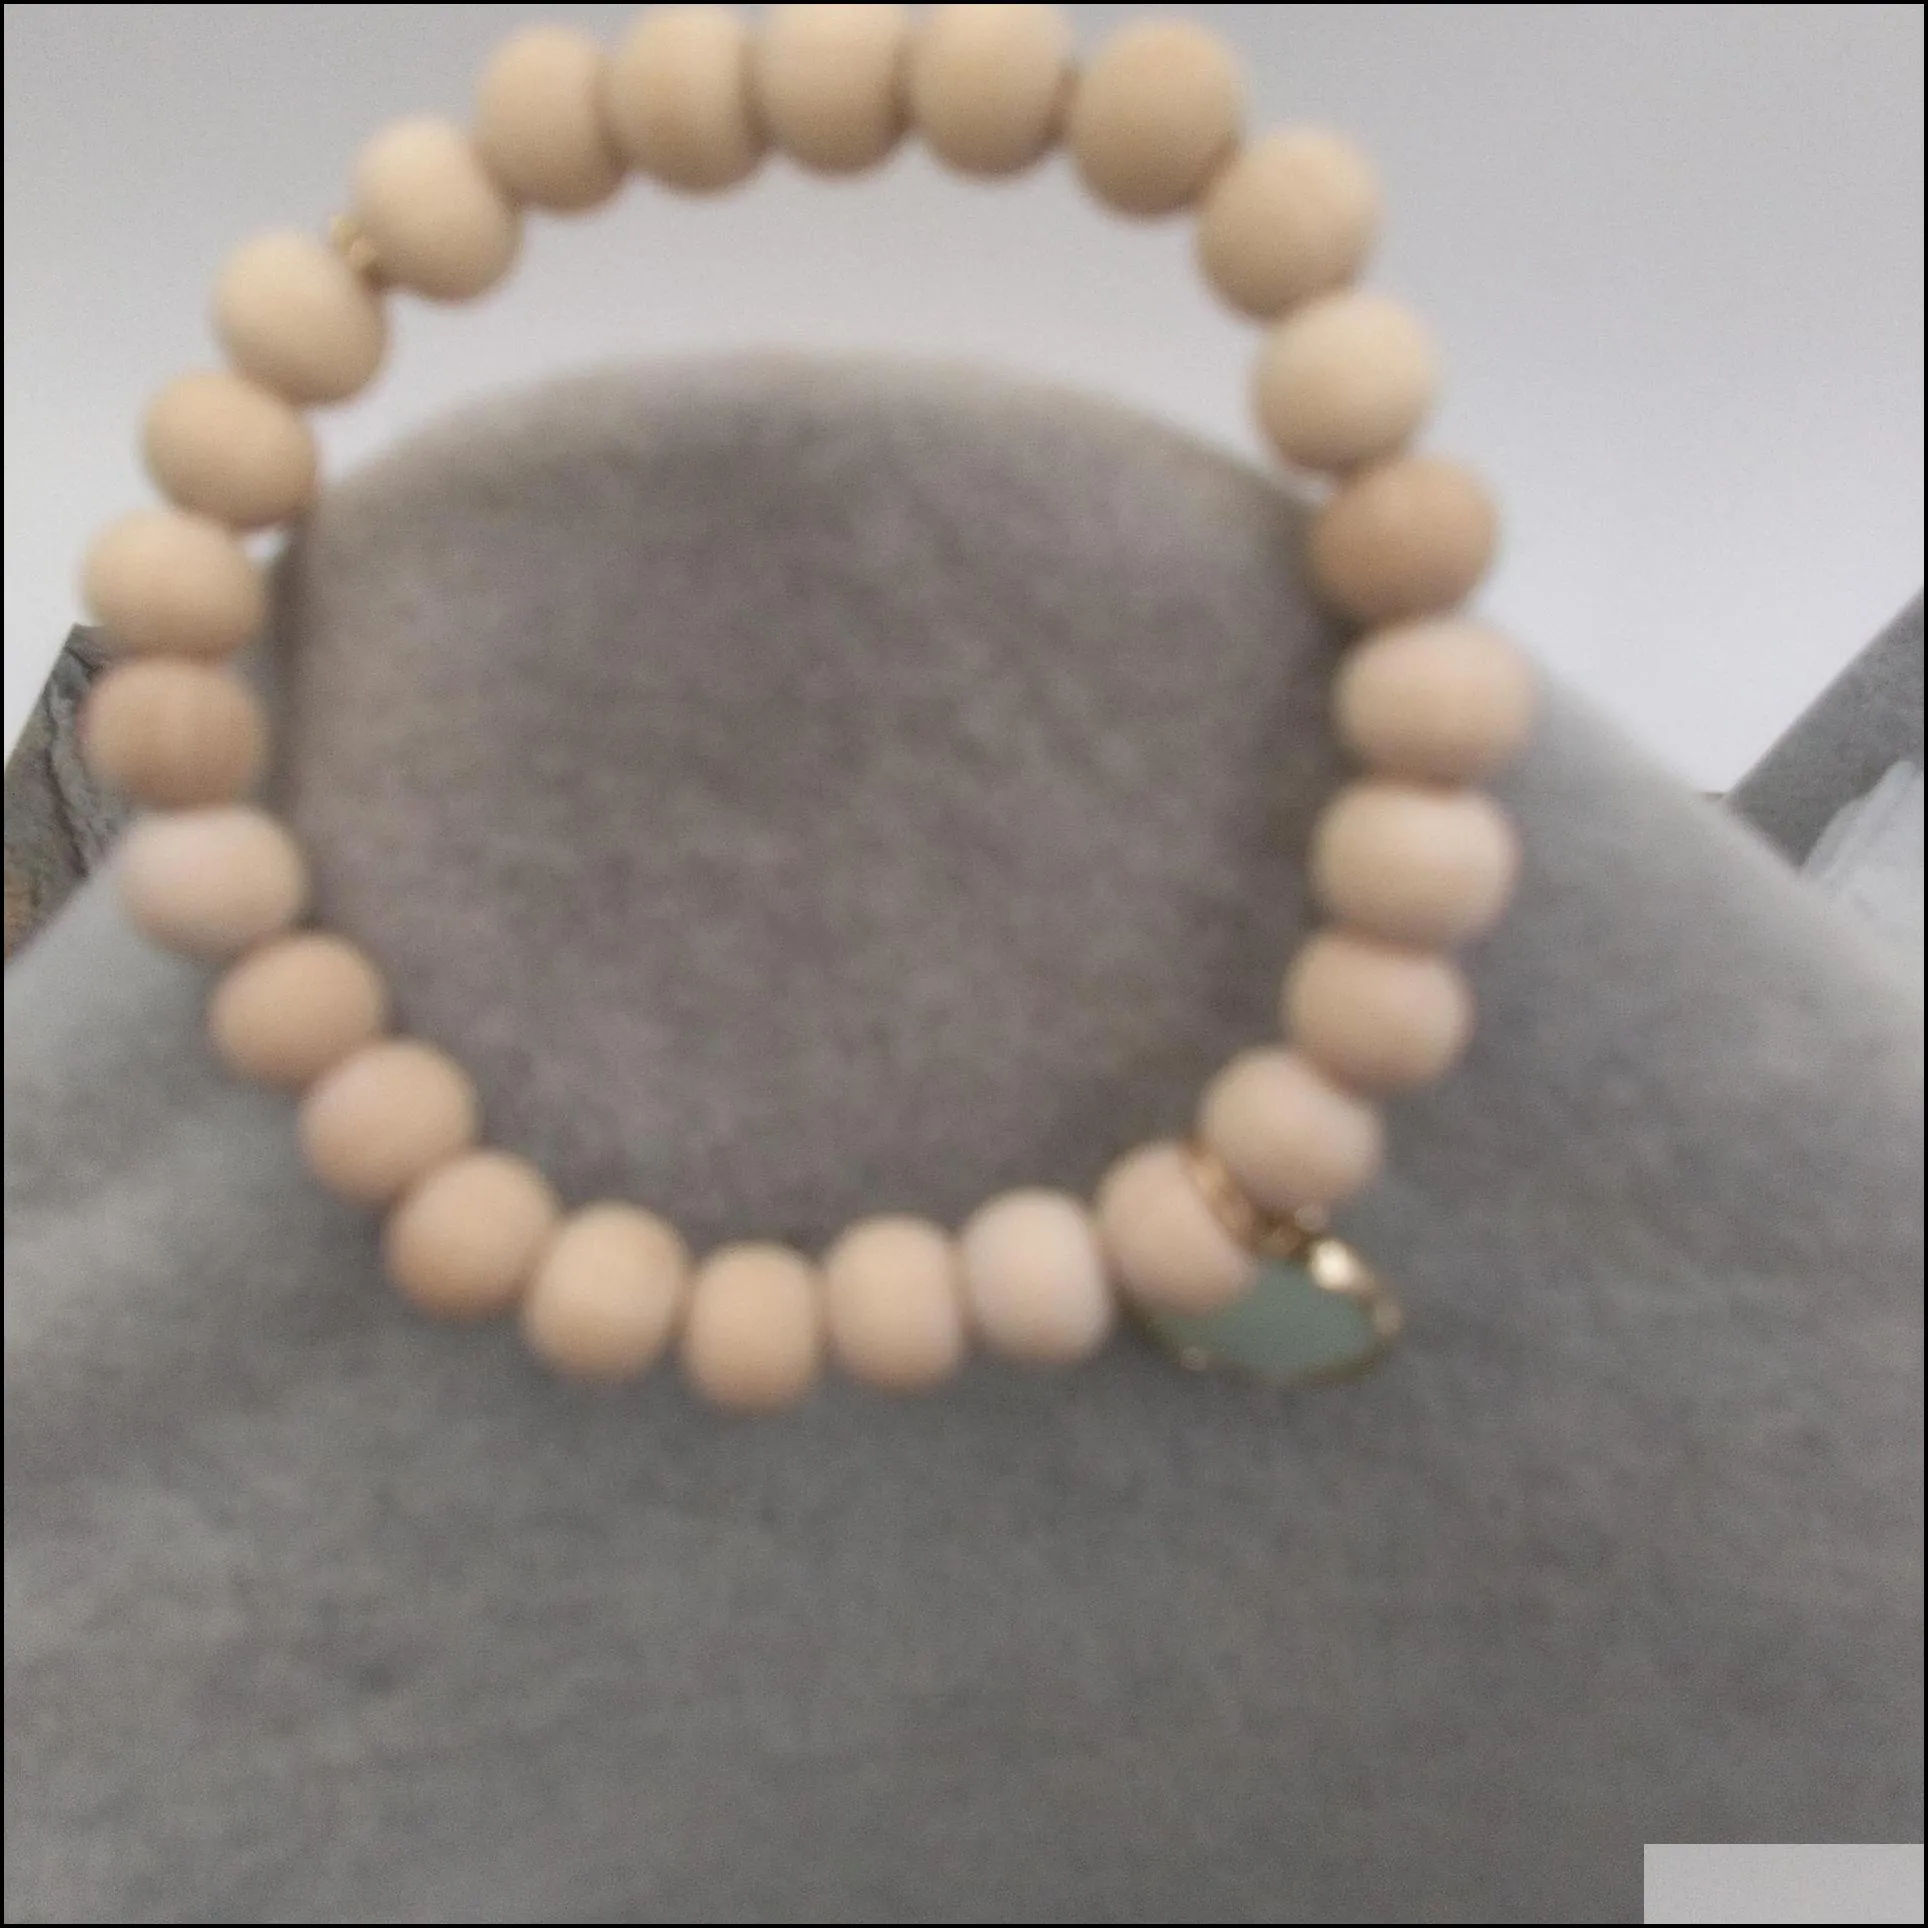 tassel bangle jewelry wooden bead bracelet keychain bracelets pendant wristbands multiple color options wmq759